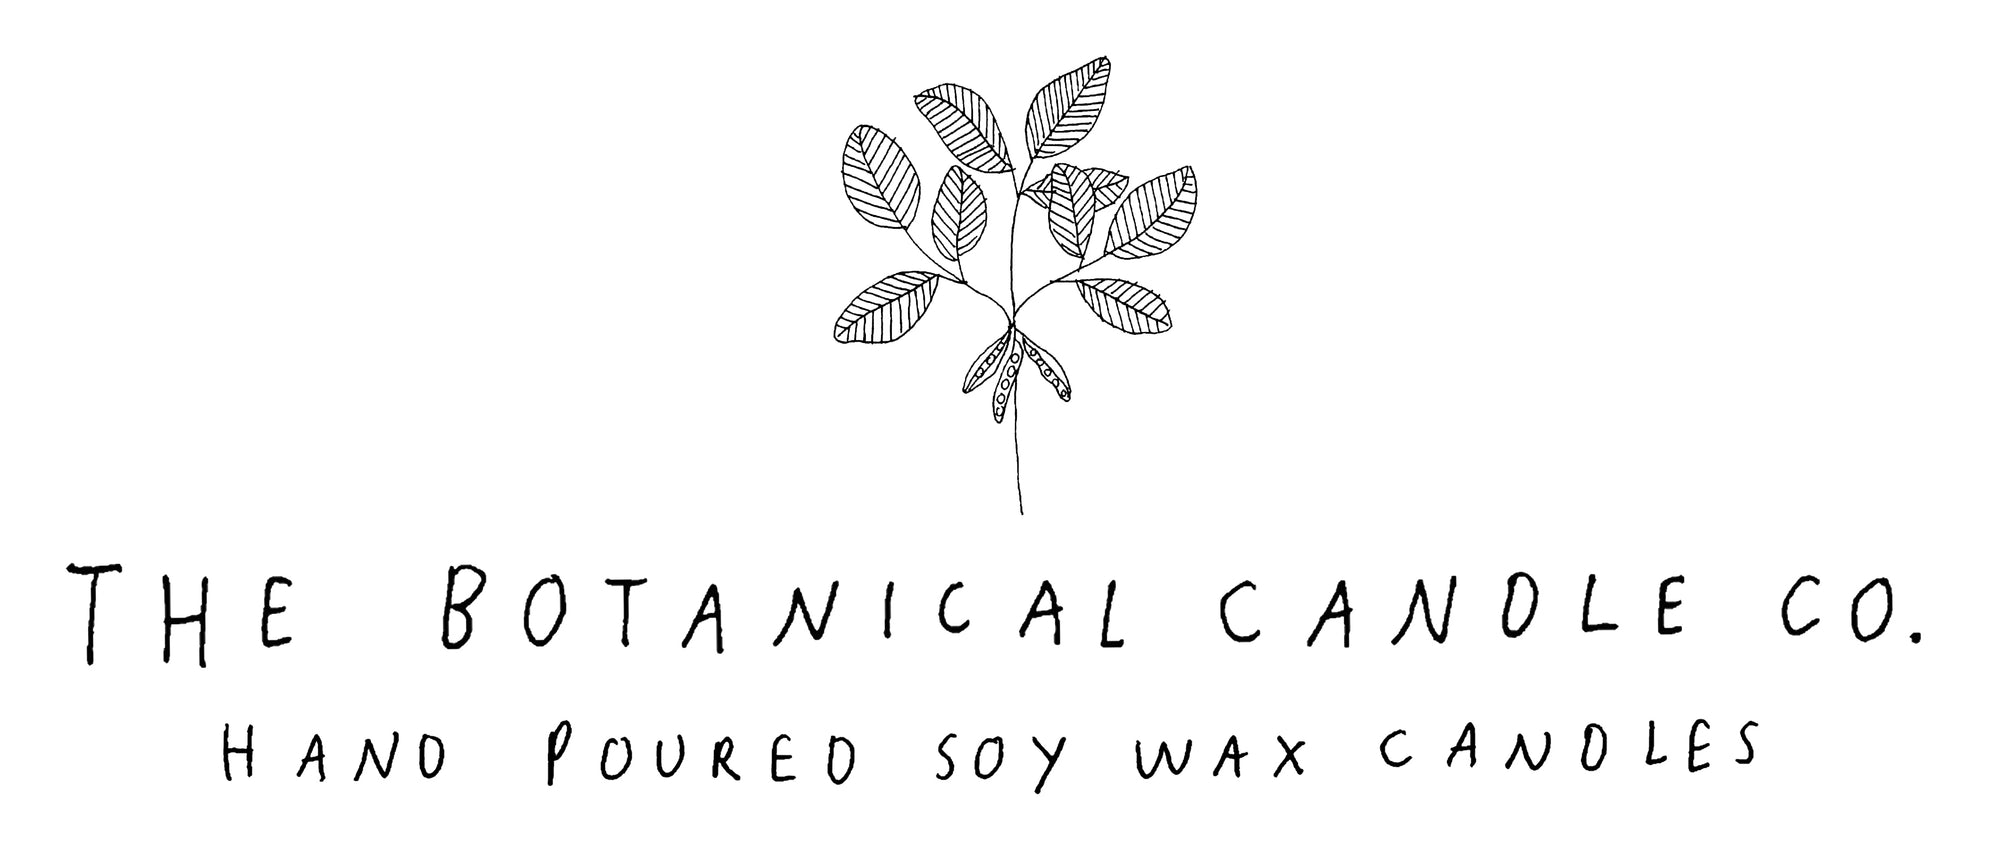 The Botanical Candle Company Limited